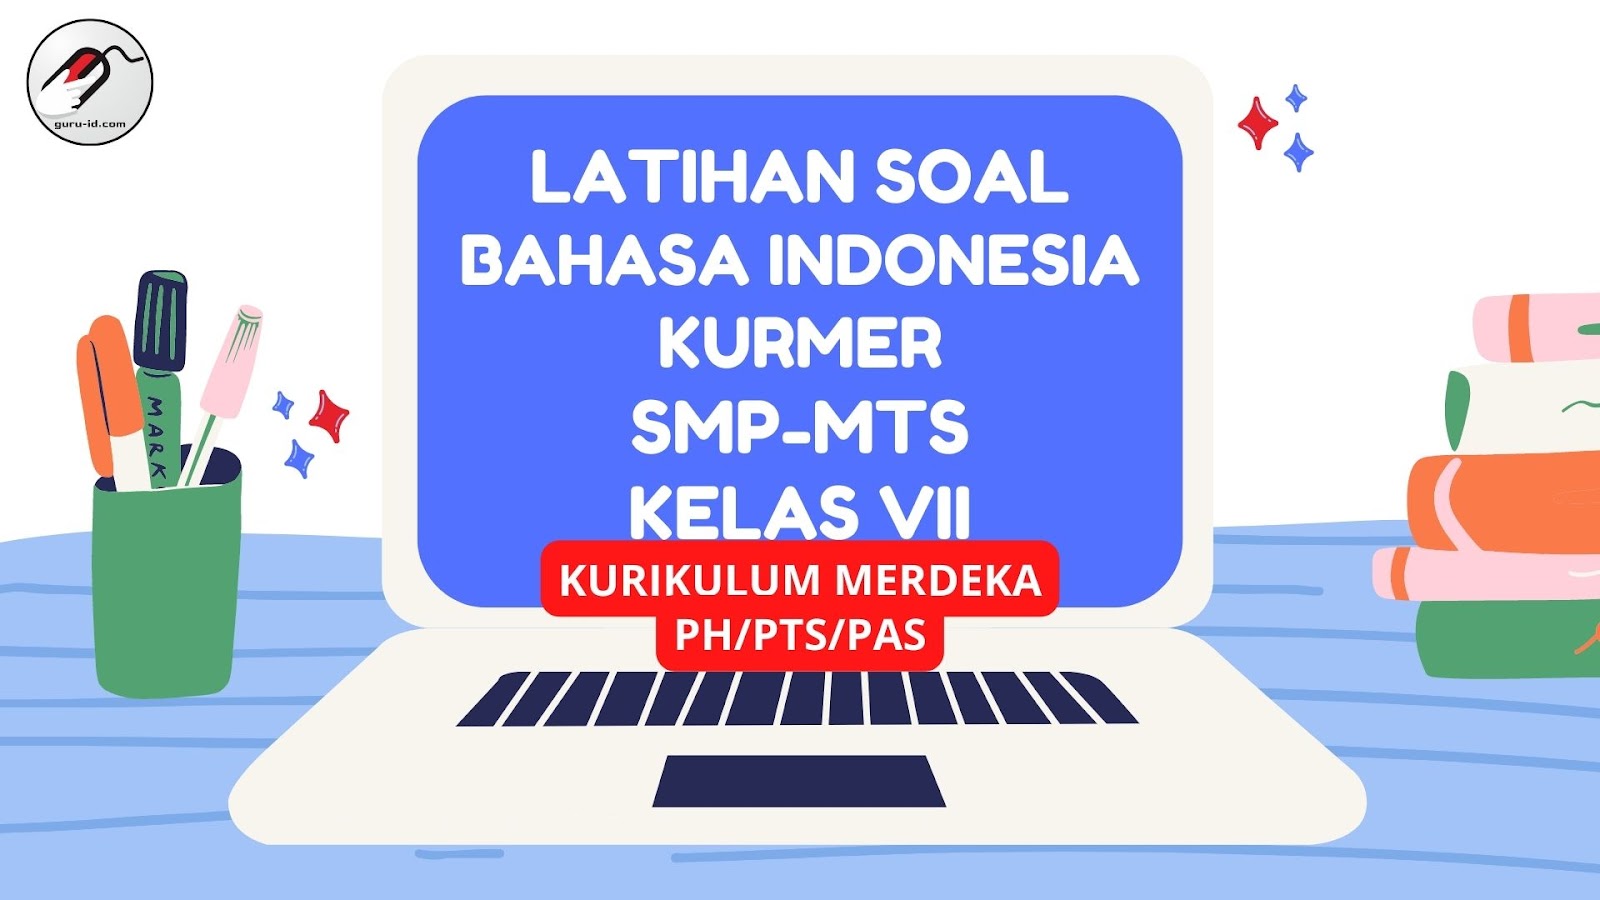 Soal bahasa indonesia kelas 7 Kurikulum Merdeka